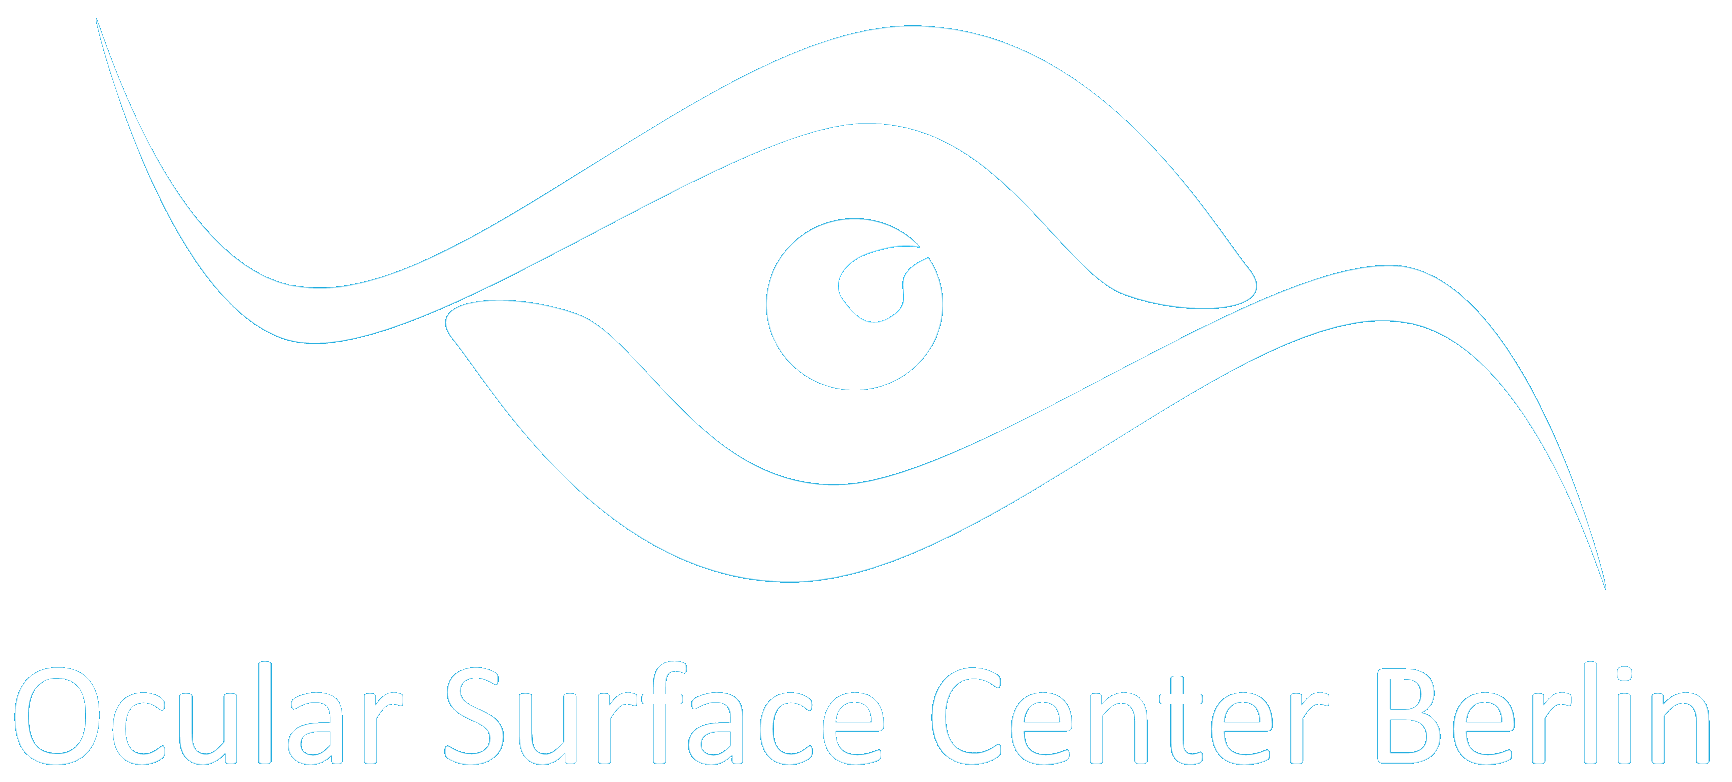 Ocular Surface Center Berlin